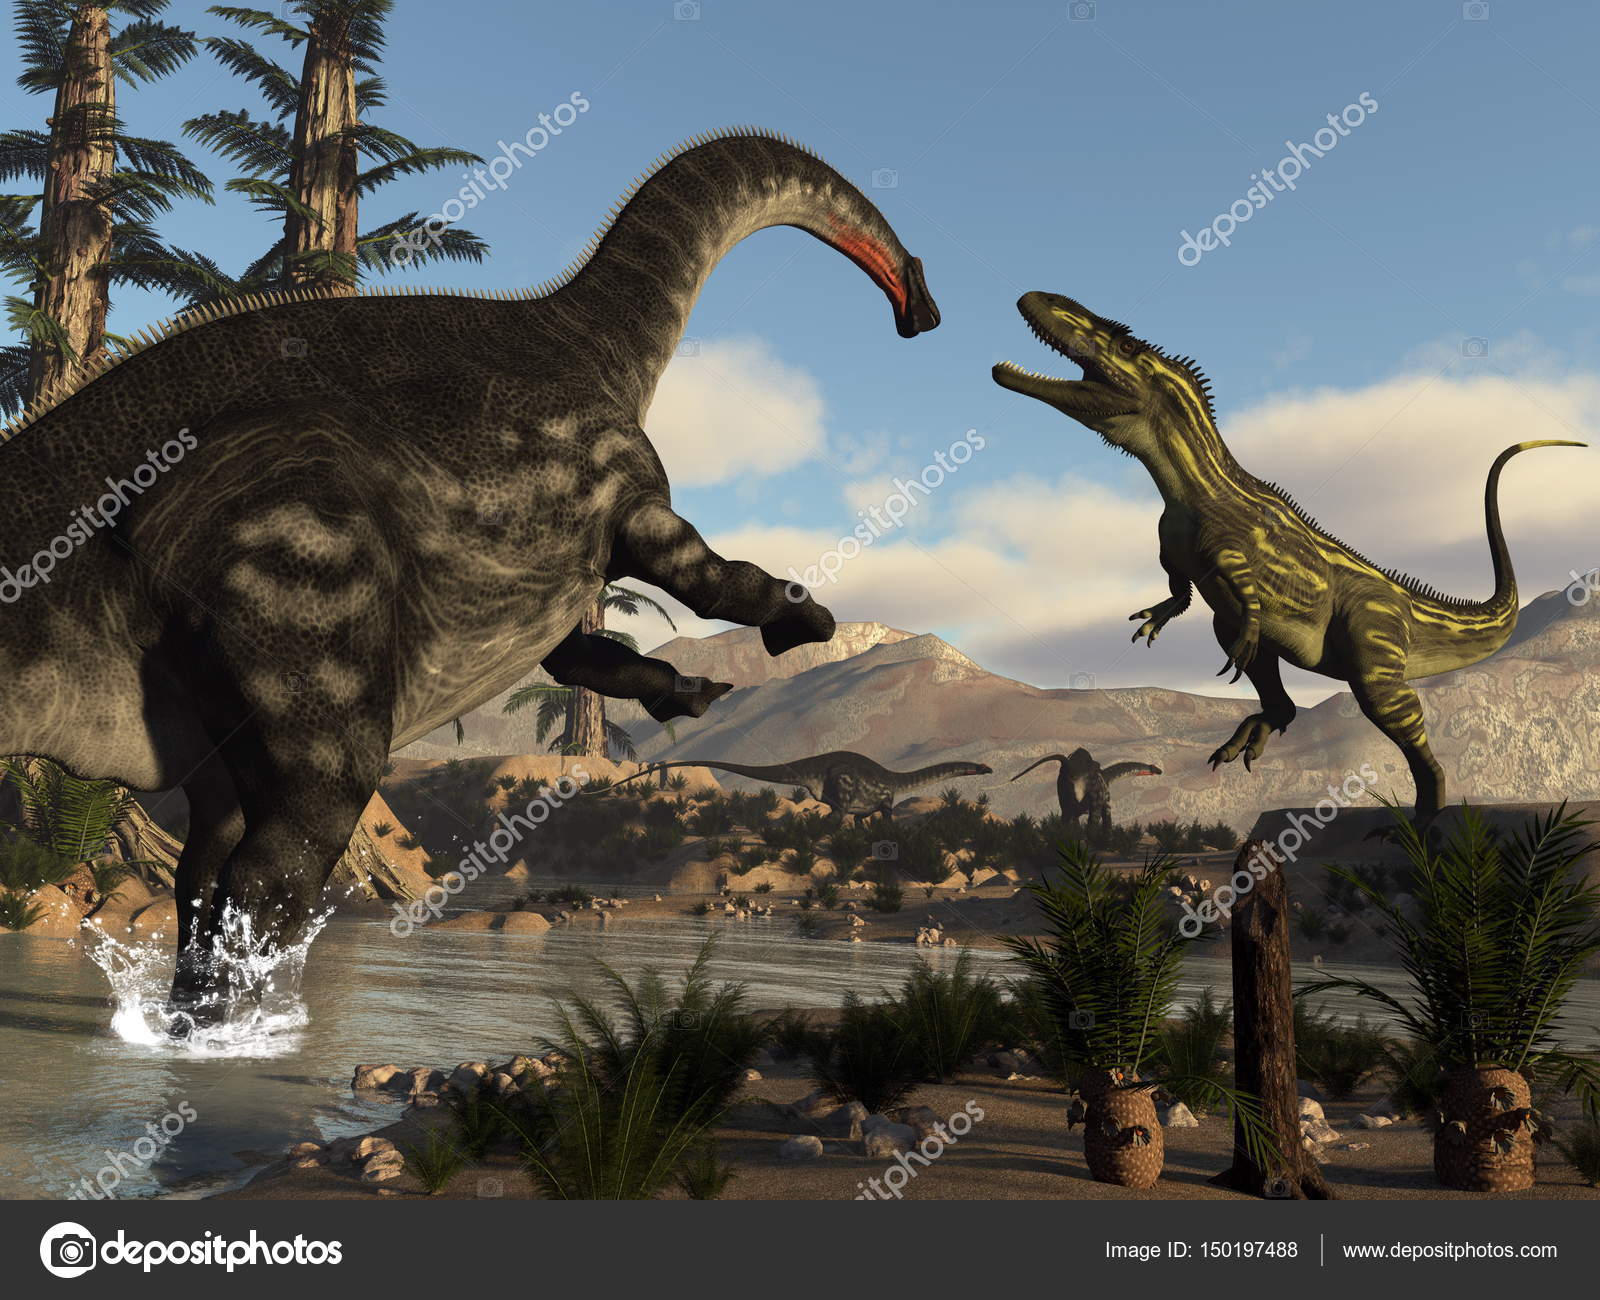 https://st3.depositphotos.com/1006706/15019/i/1600/depositphotos_150197488-stock-photo-torvosaurus-and-apatosaurus-dinosaurs-fighting.jpg